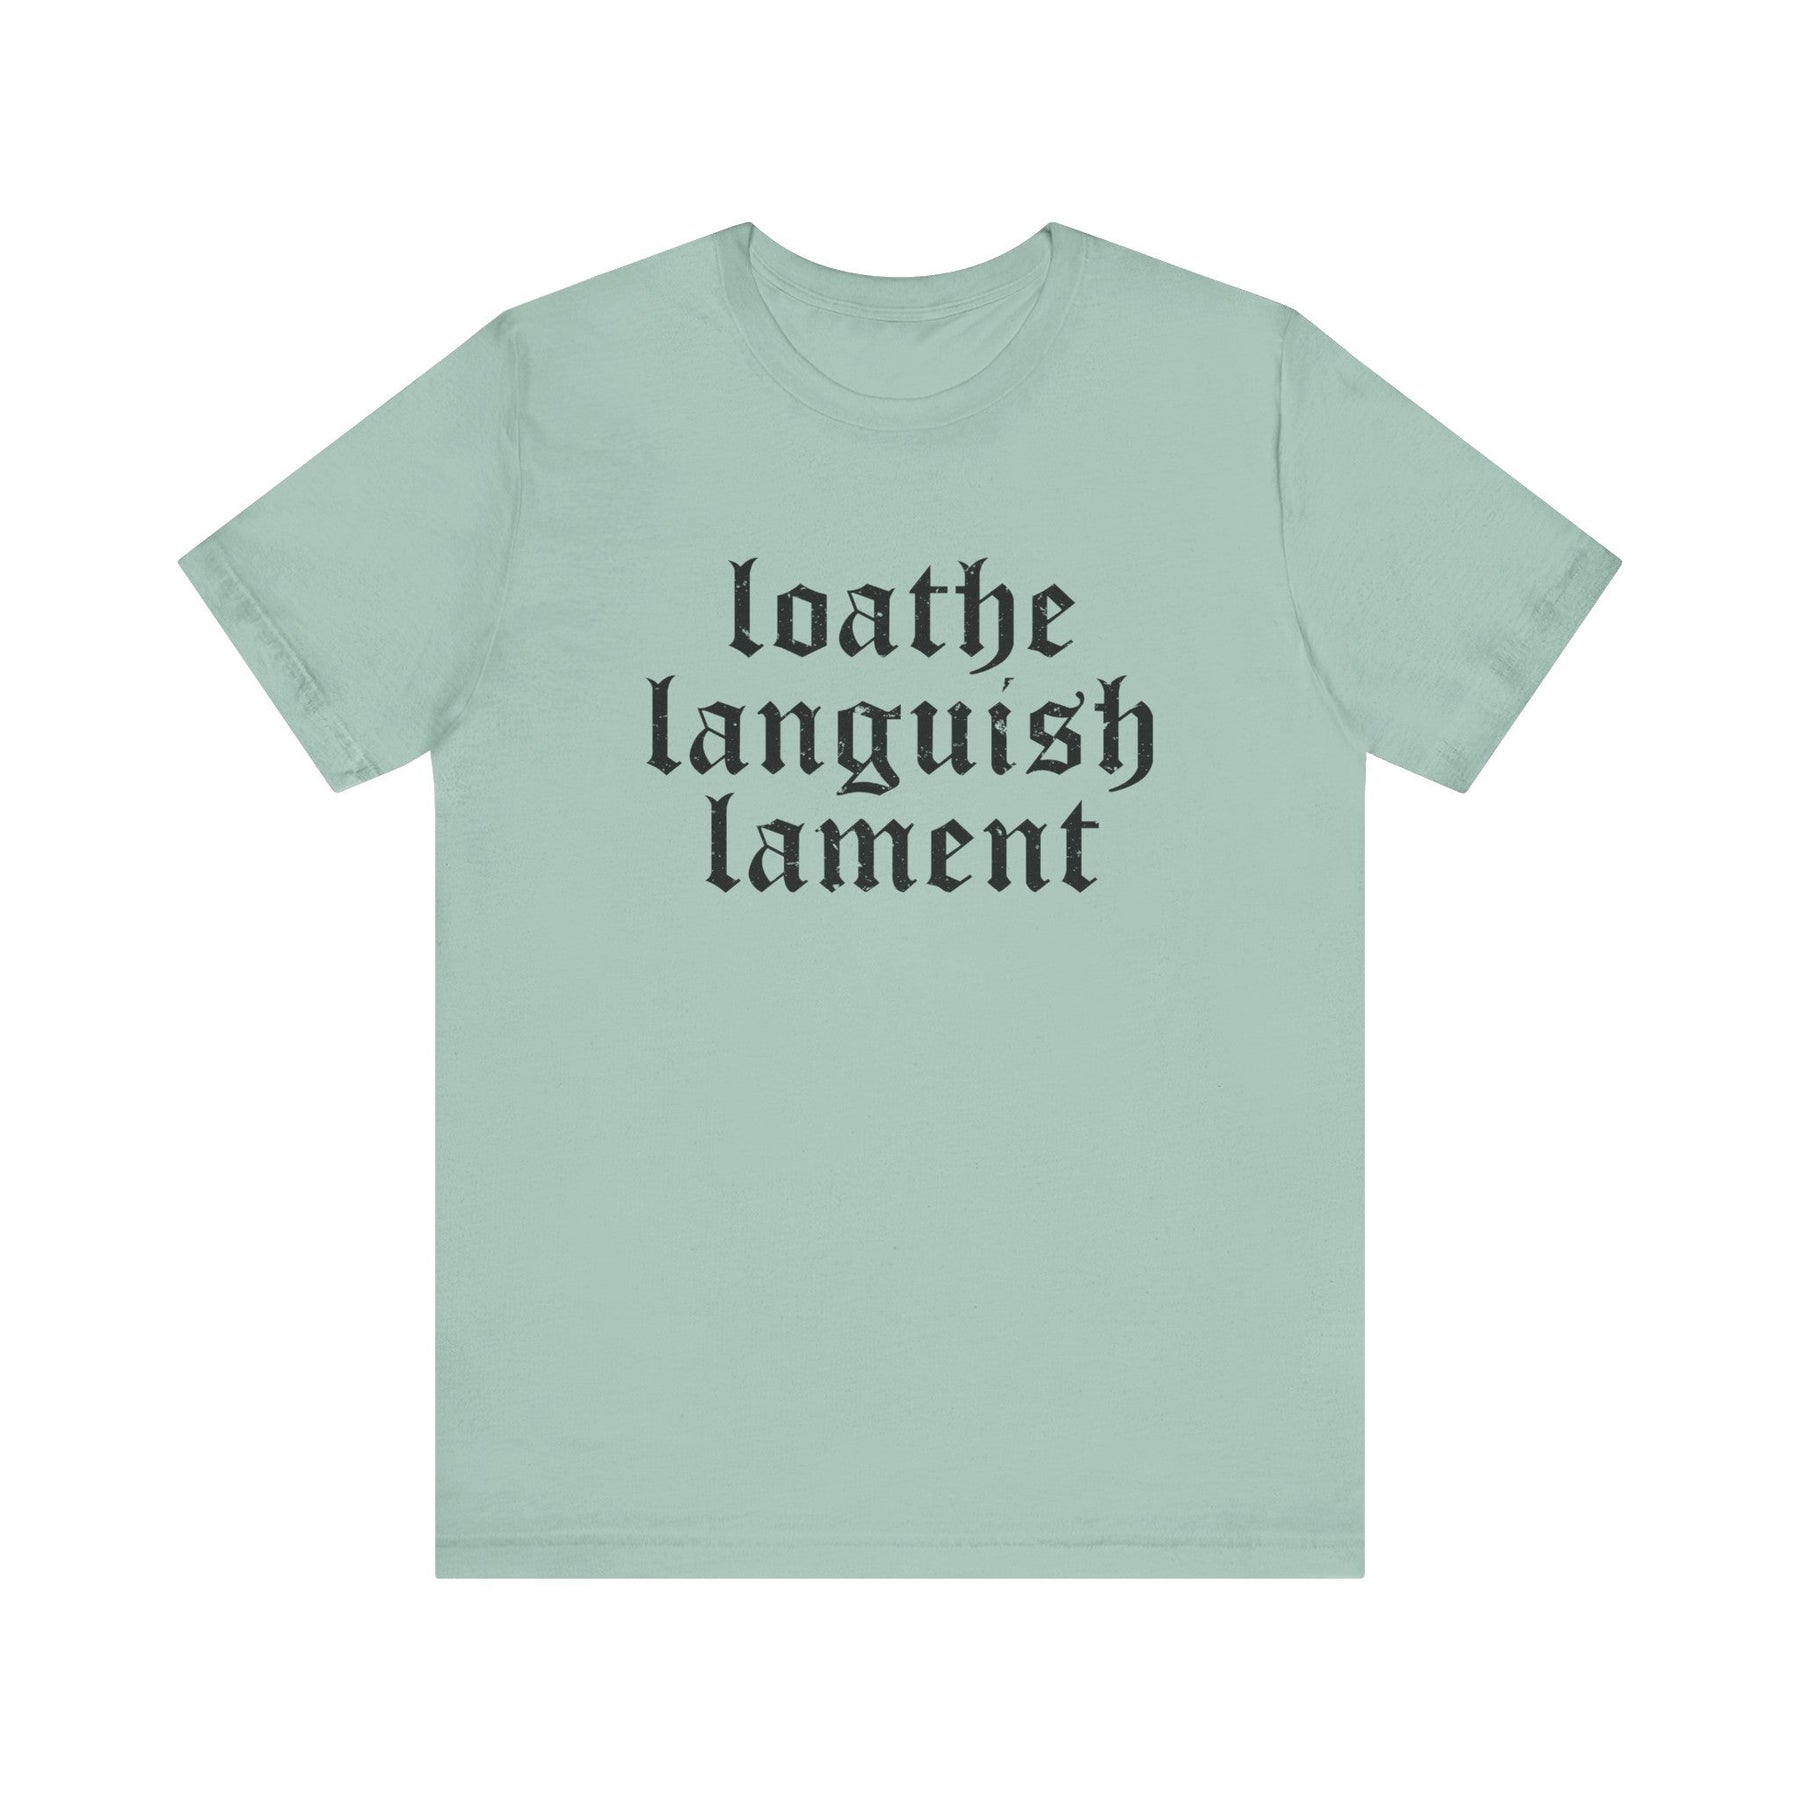 Loathe Languish Lament Centered T - Shirt - Goth Cloth Co.T - Shirt29919934316901008849